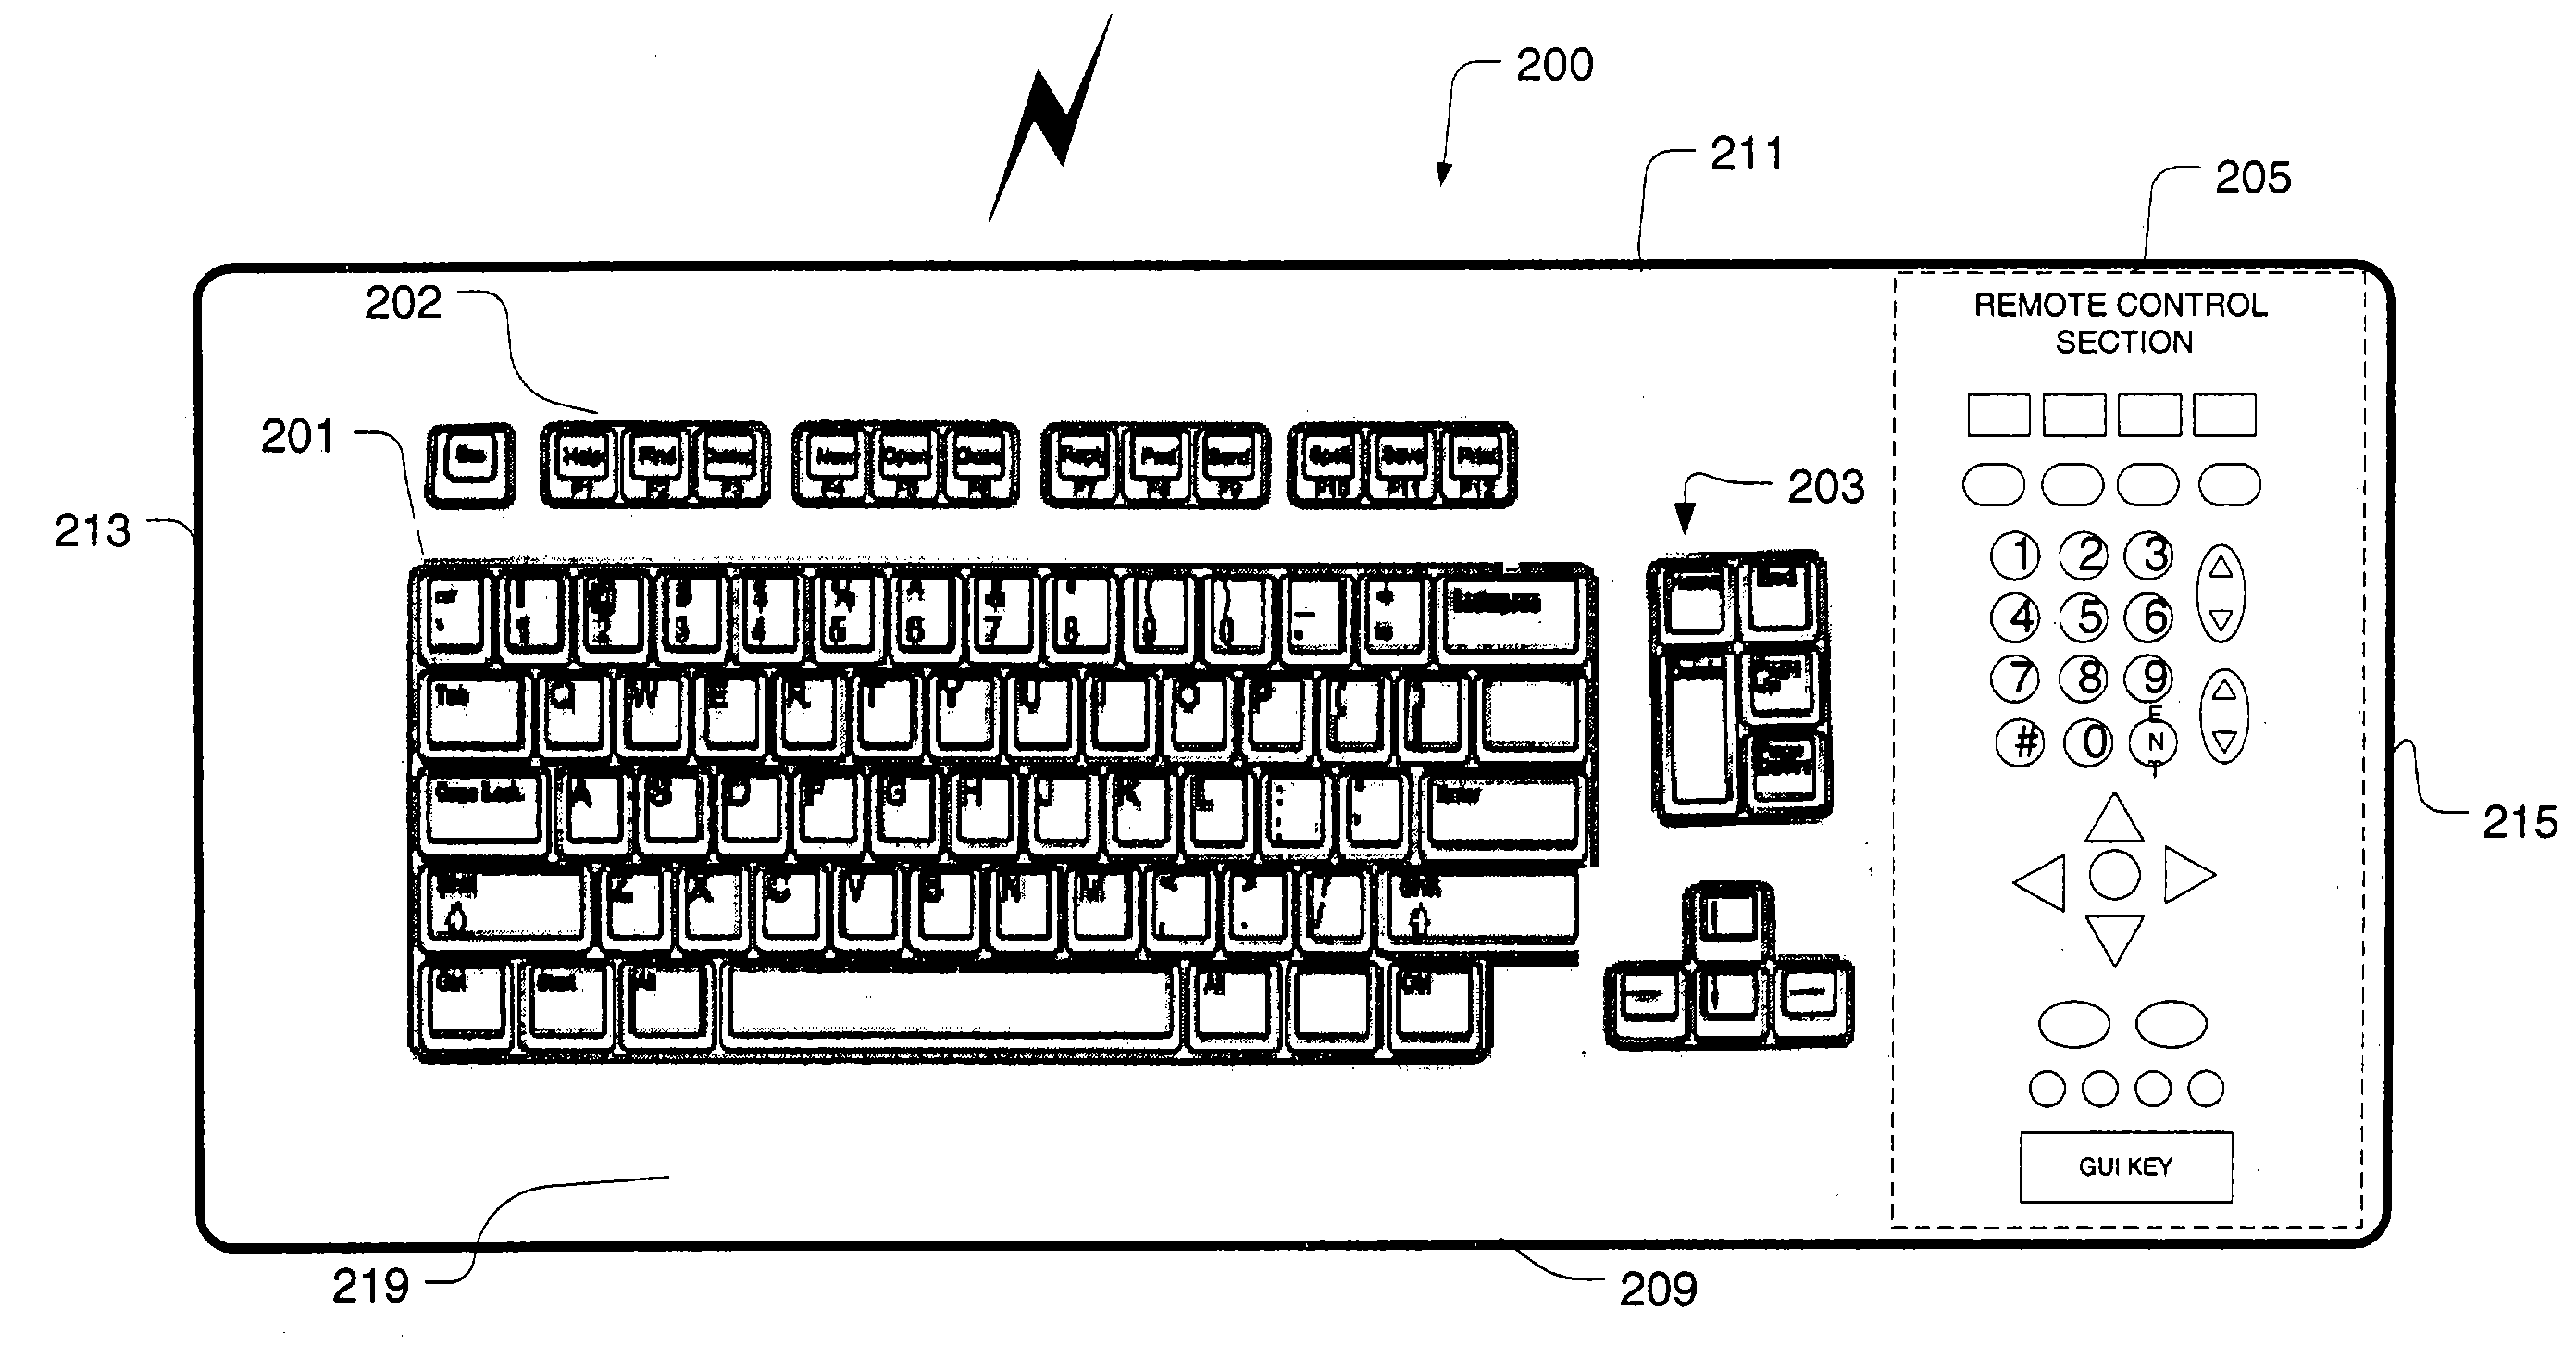 Universal remote computer keyboard